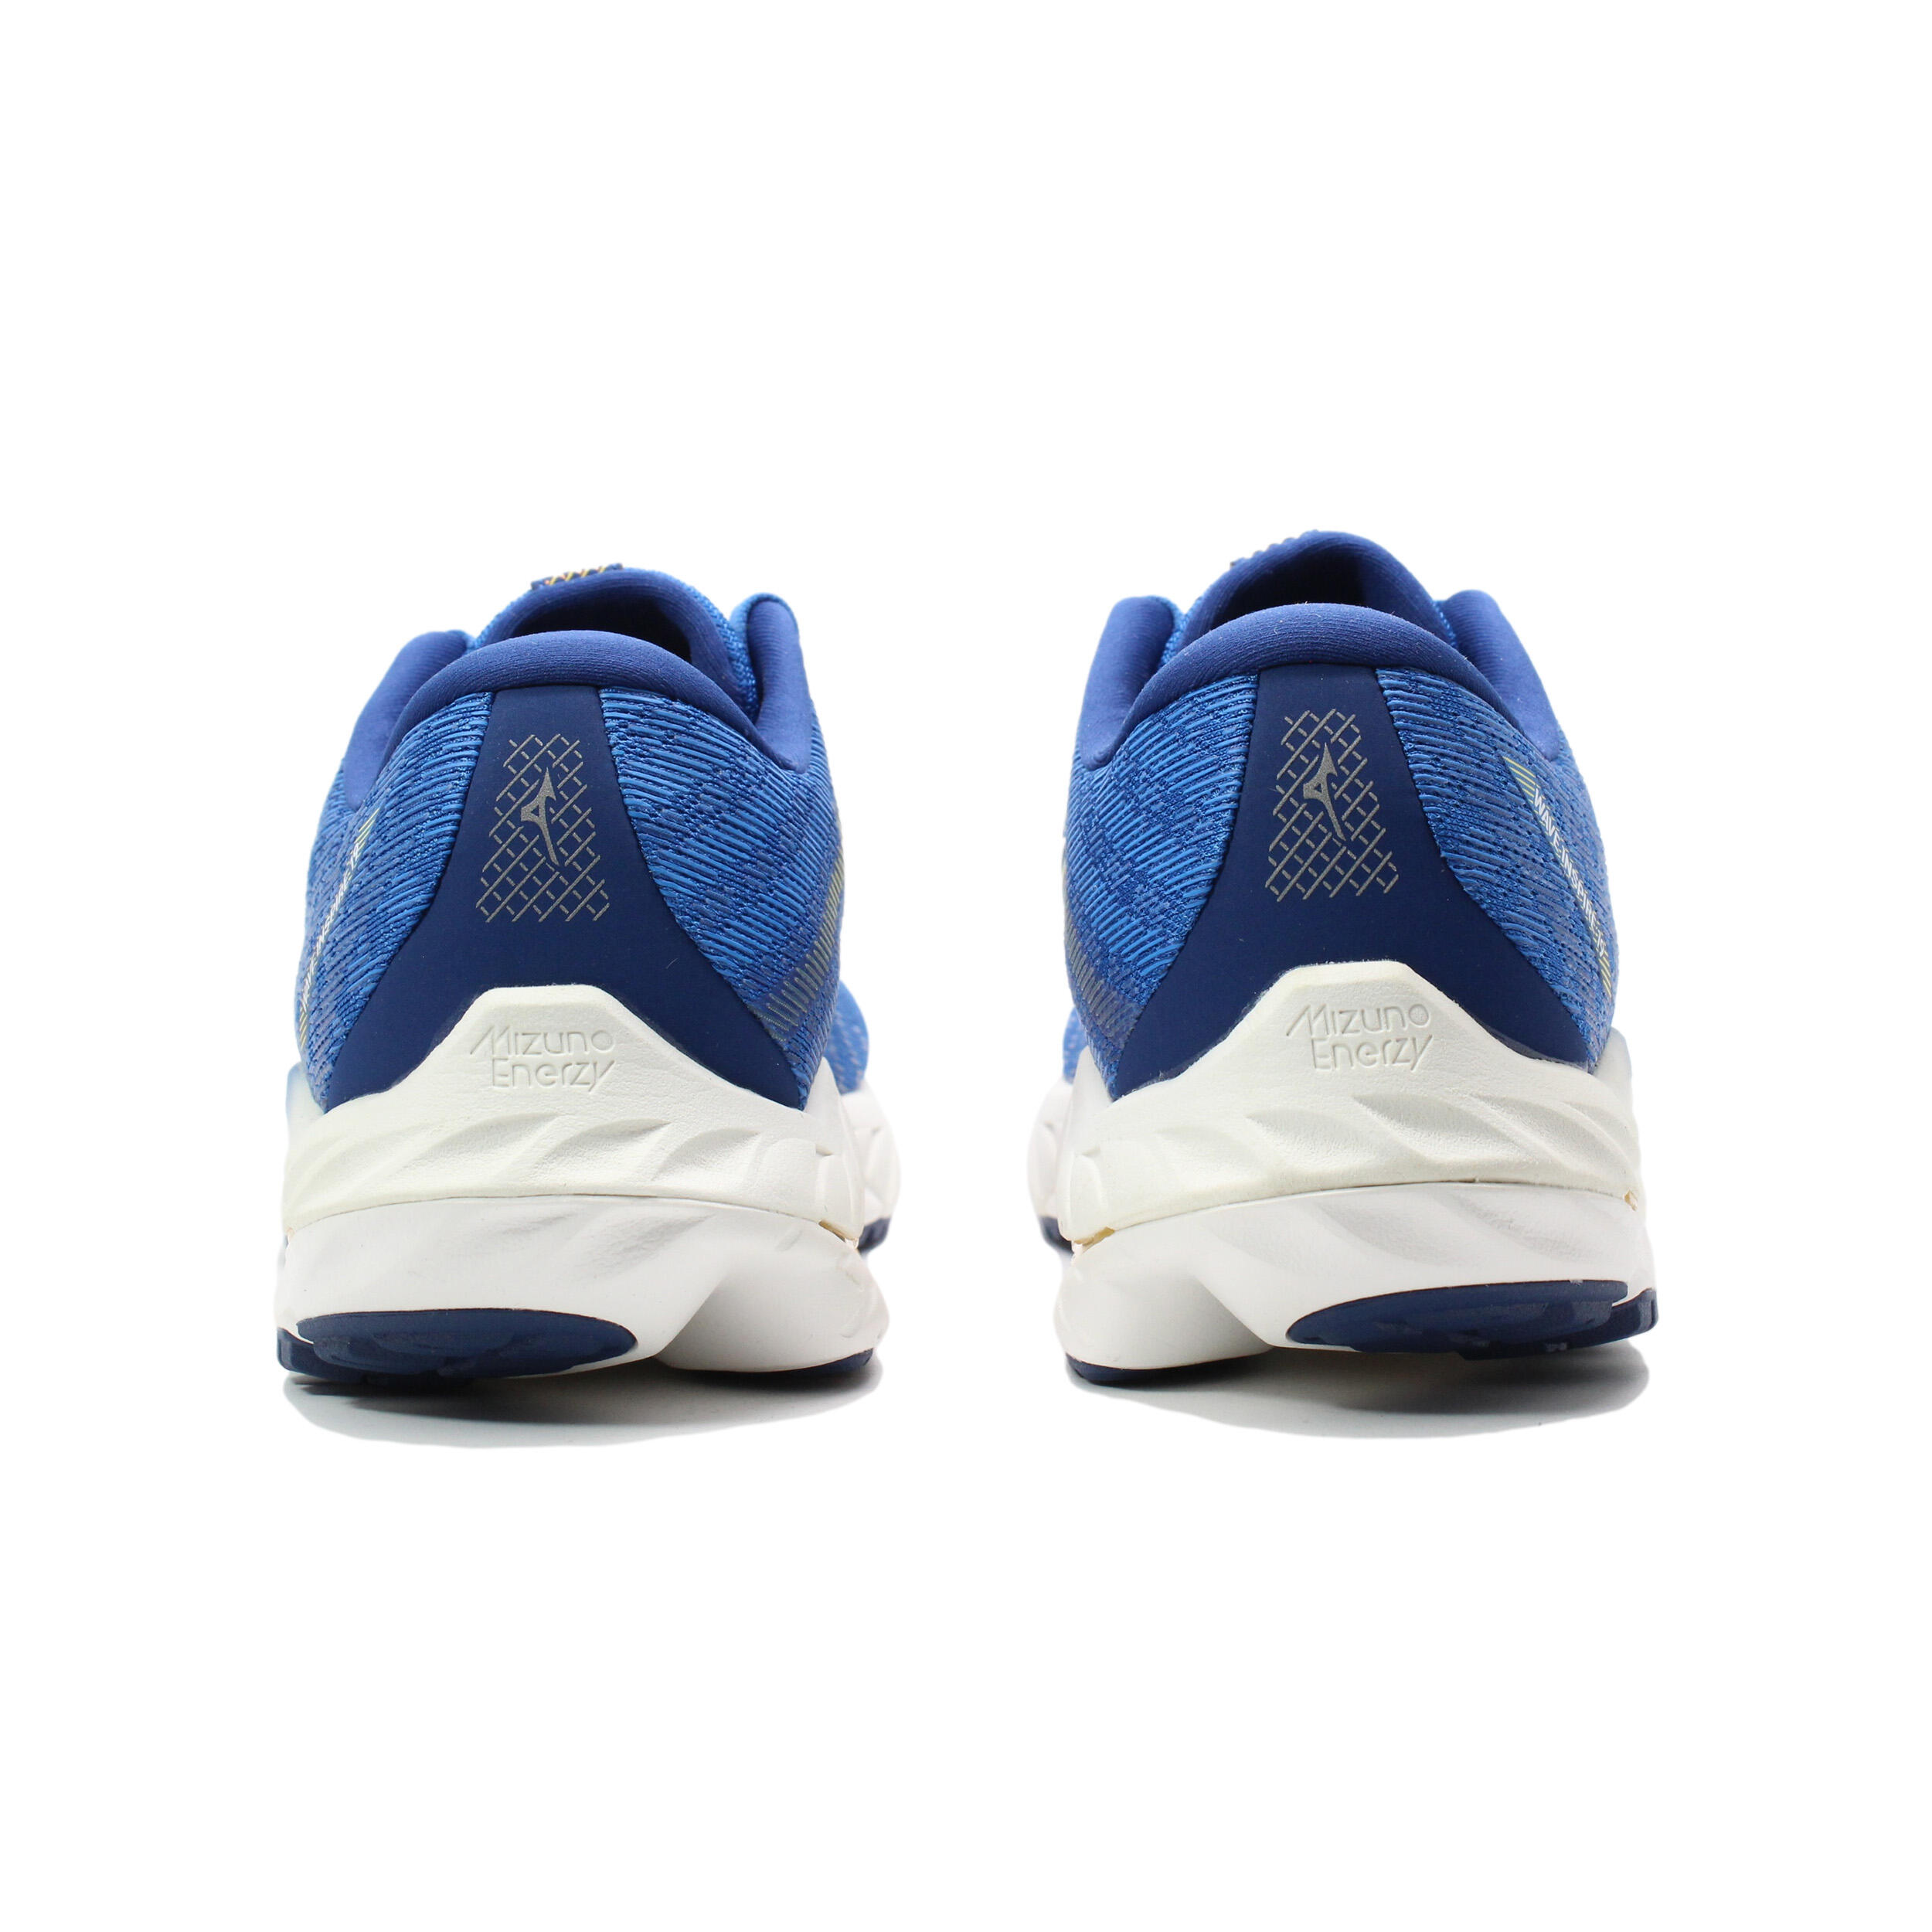 Running shoes for Men Mizuno Wave Inspire 19 3/5